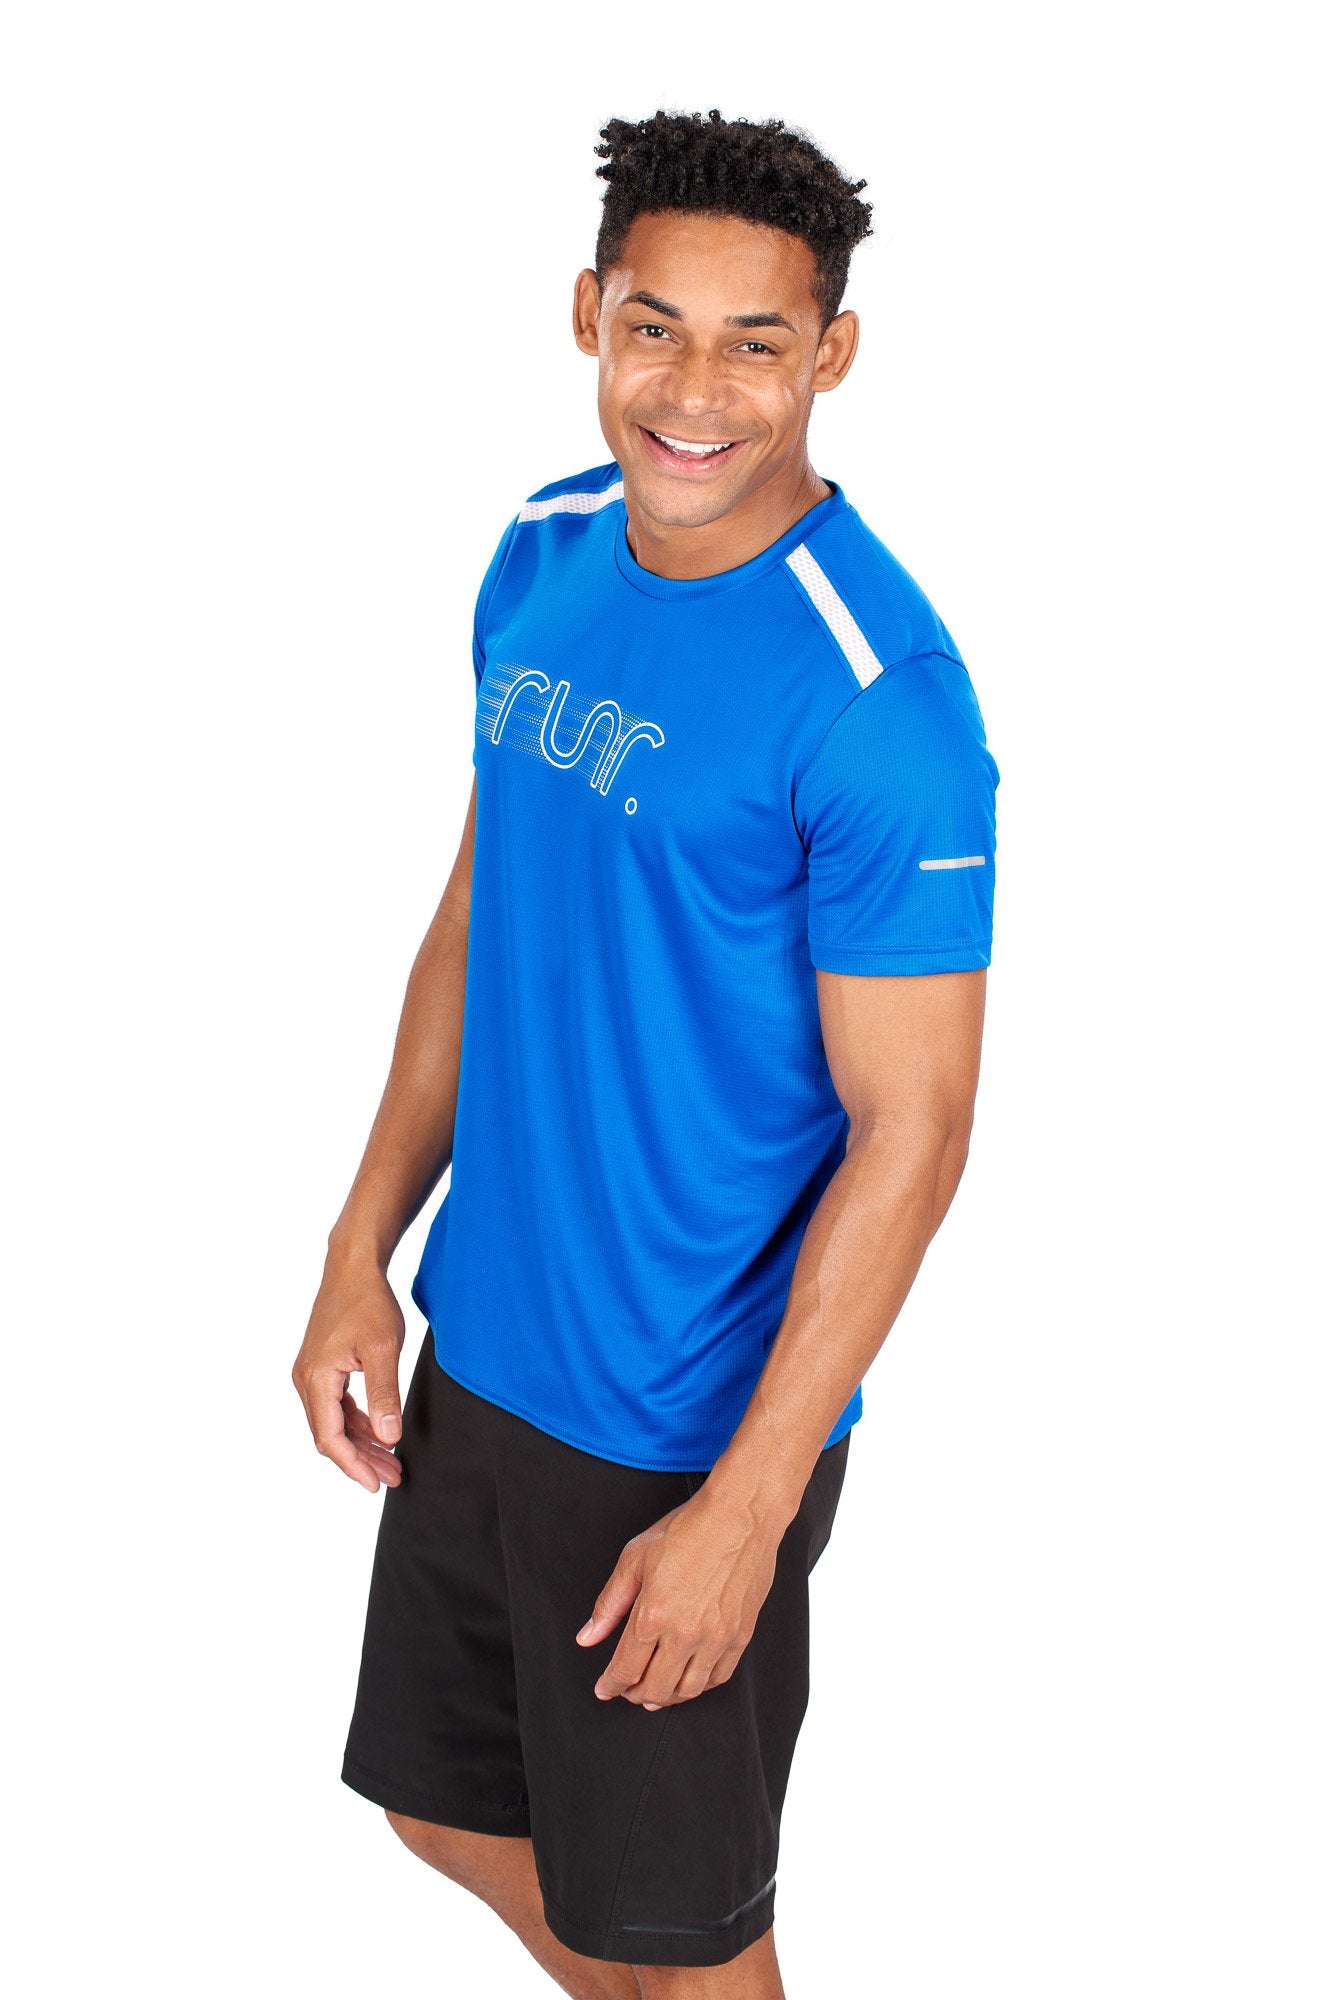 Men's EcoTek Runr Technical T-Shirt - Electric Blue